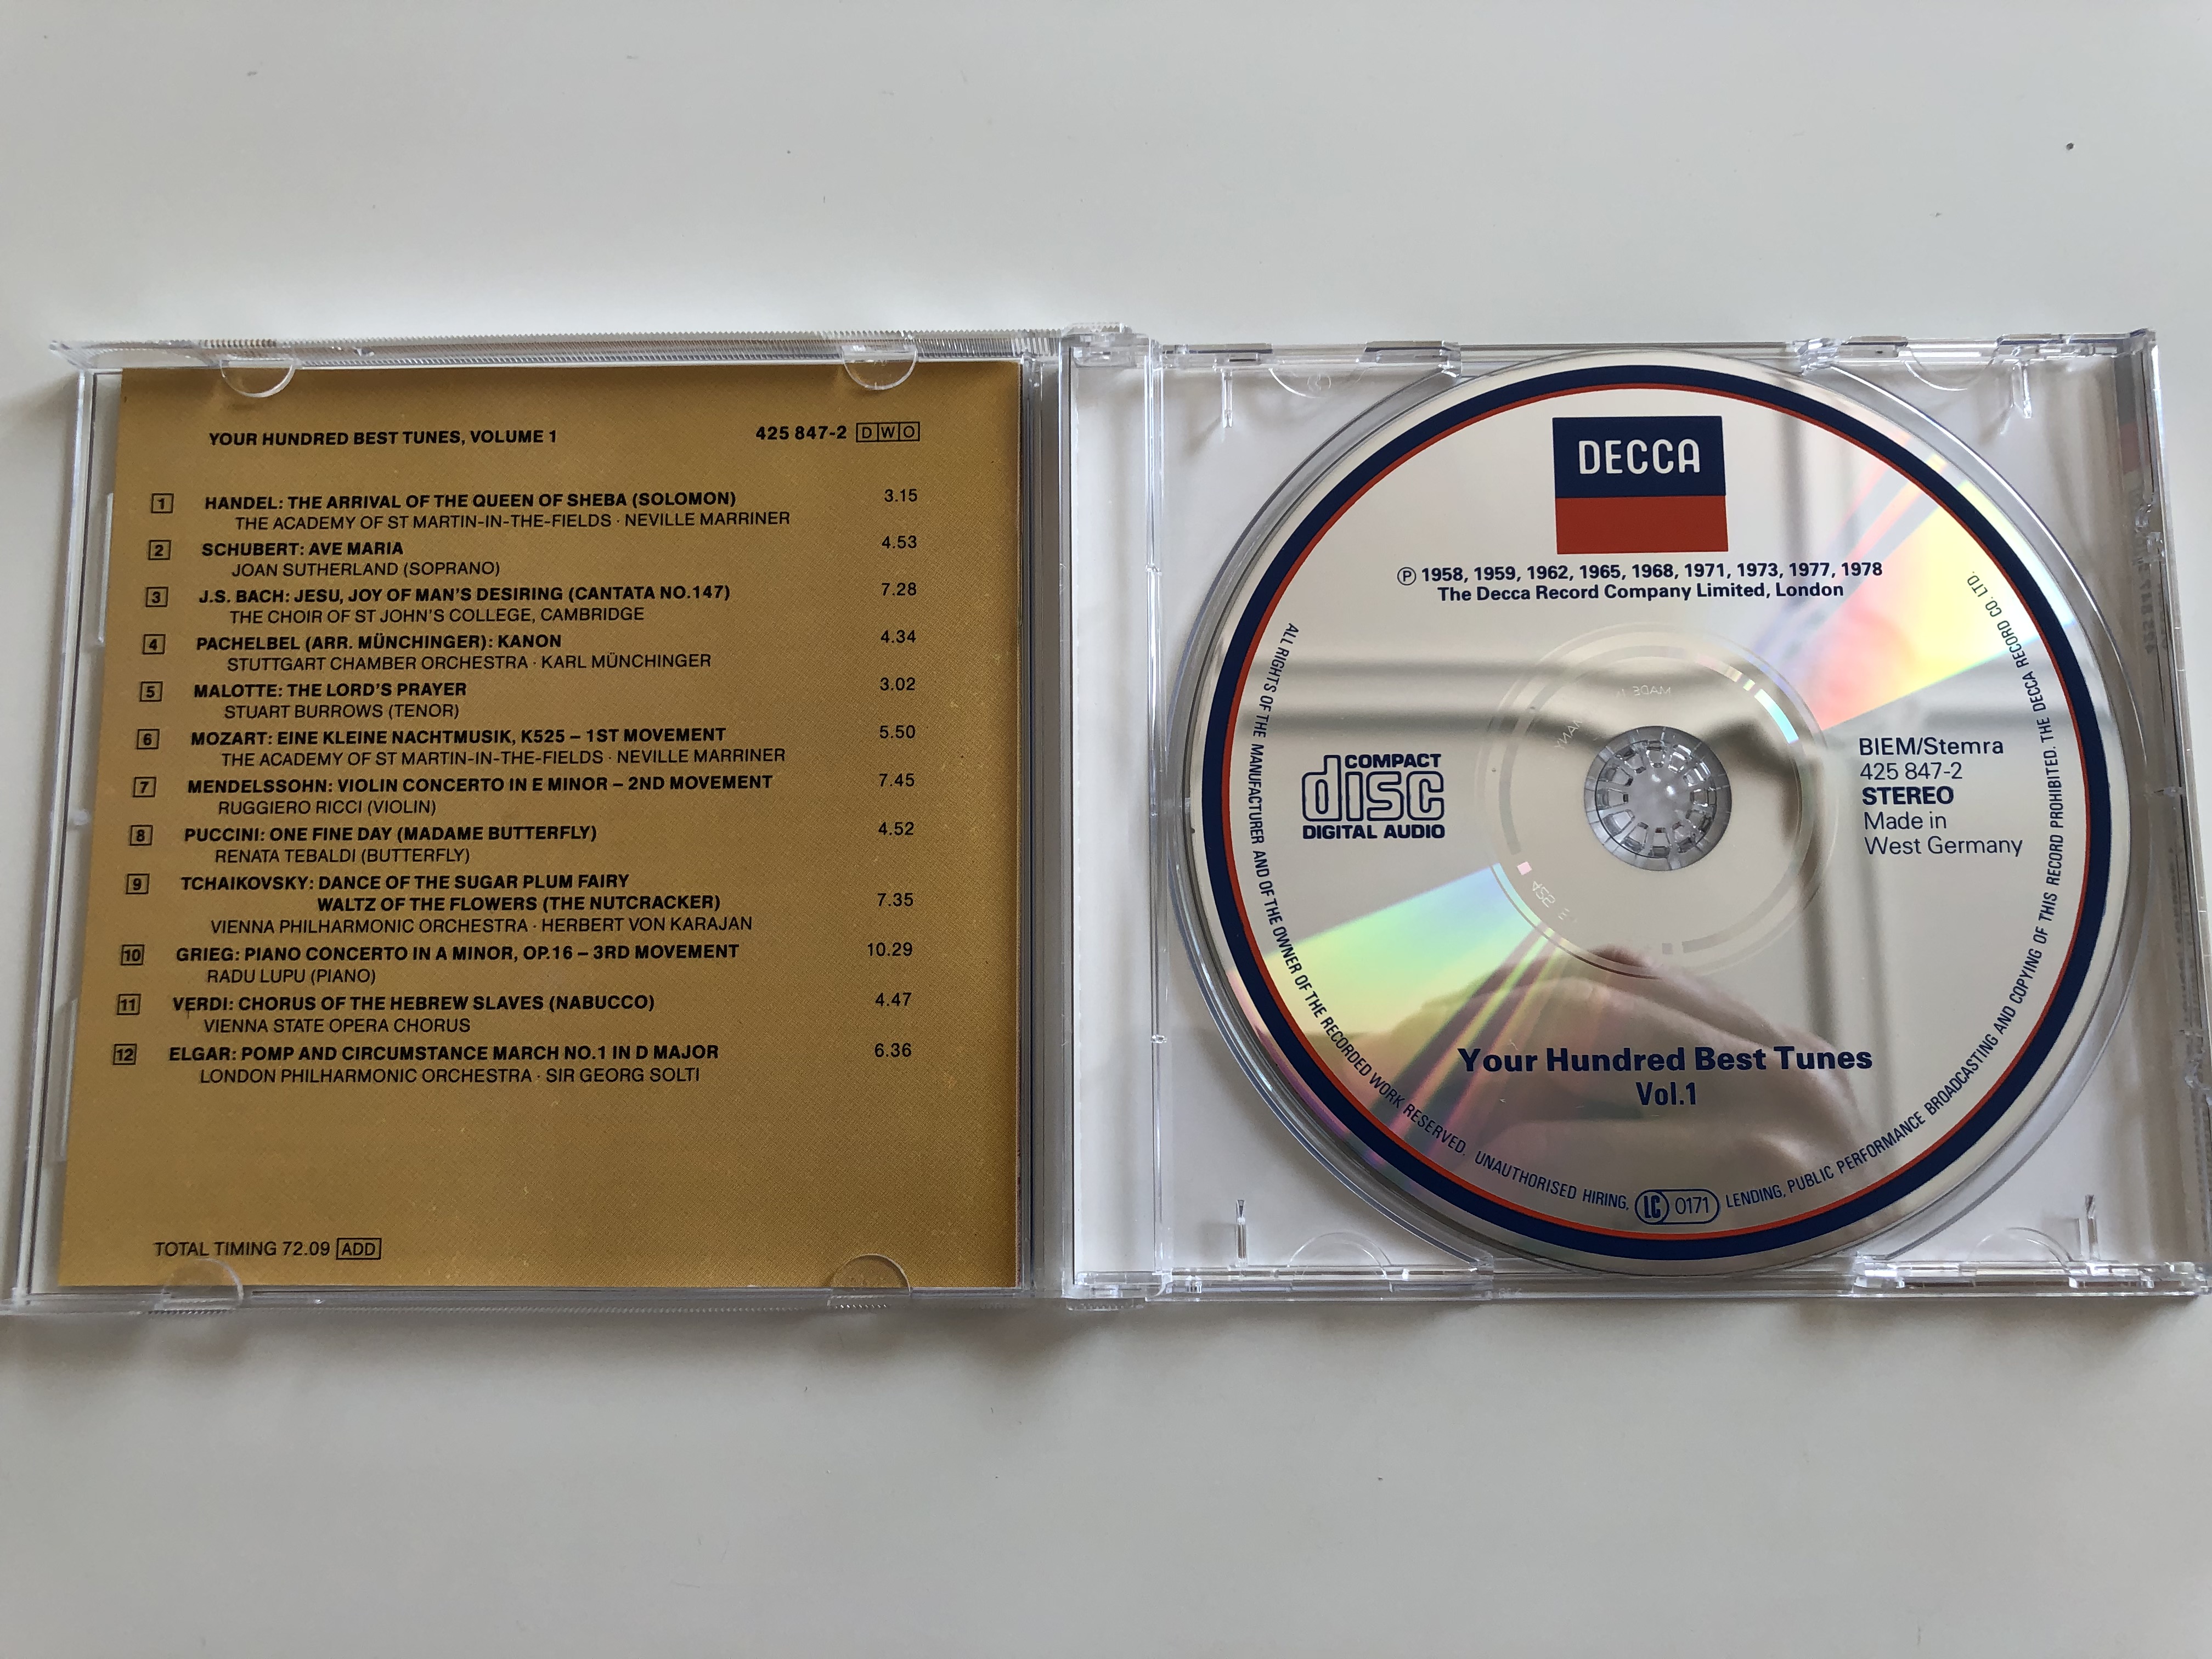 your-hundred-best-tunes-vol.-1-featuring-jesu-joy-of-man-s-desiring-11-other-titles-decca-audio-cd-1990-425-847-2-6-.jpg